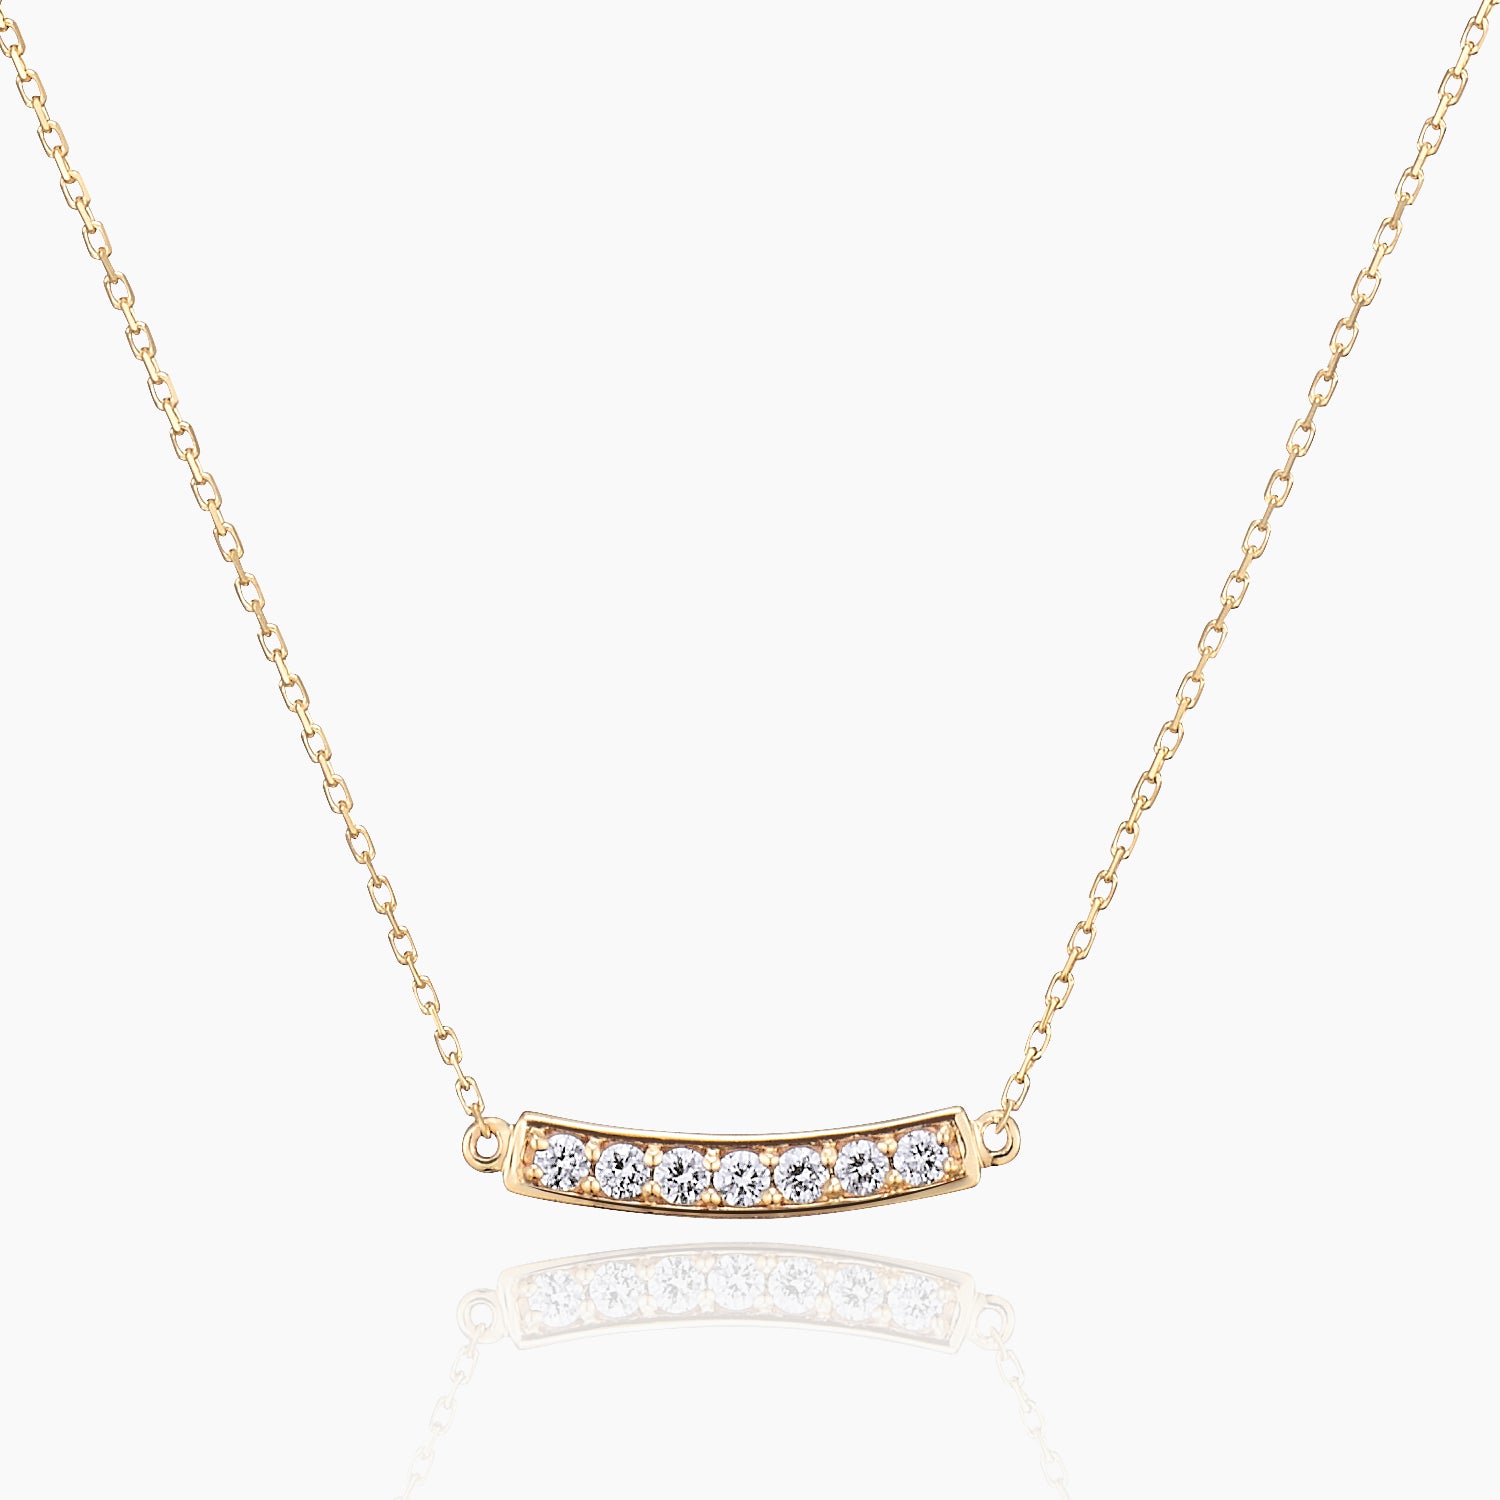 Earl アール ネックレス 宝石は天然ダイヤモンド 計0.05ct 素材はK10のイエローゴールド 商品番号MA10 正面